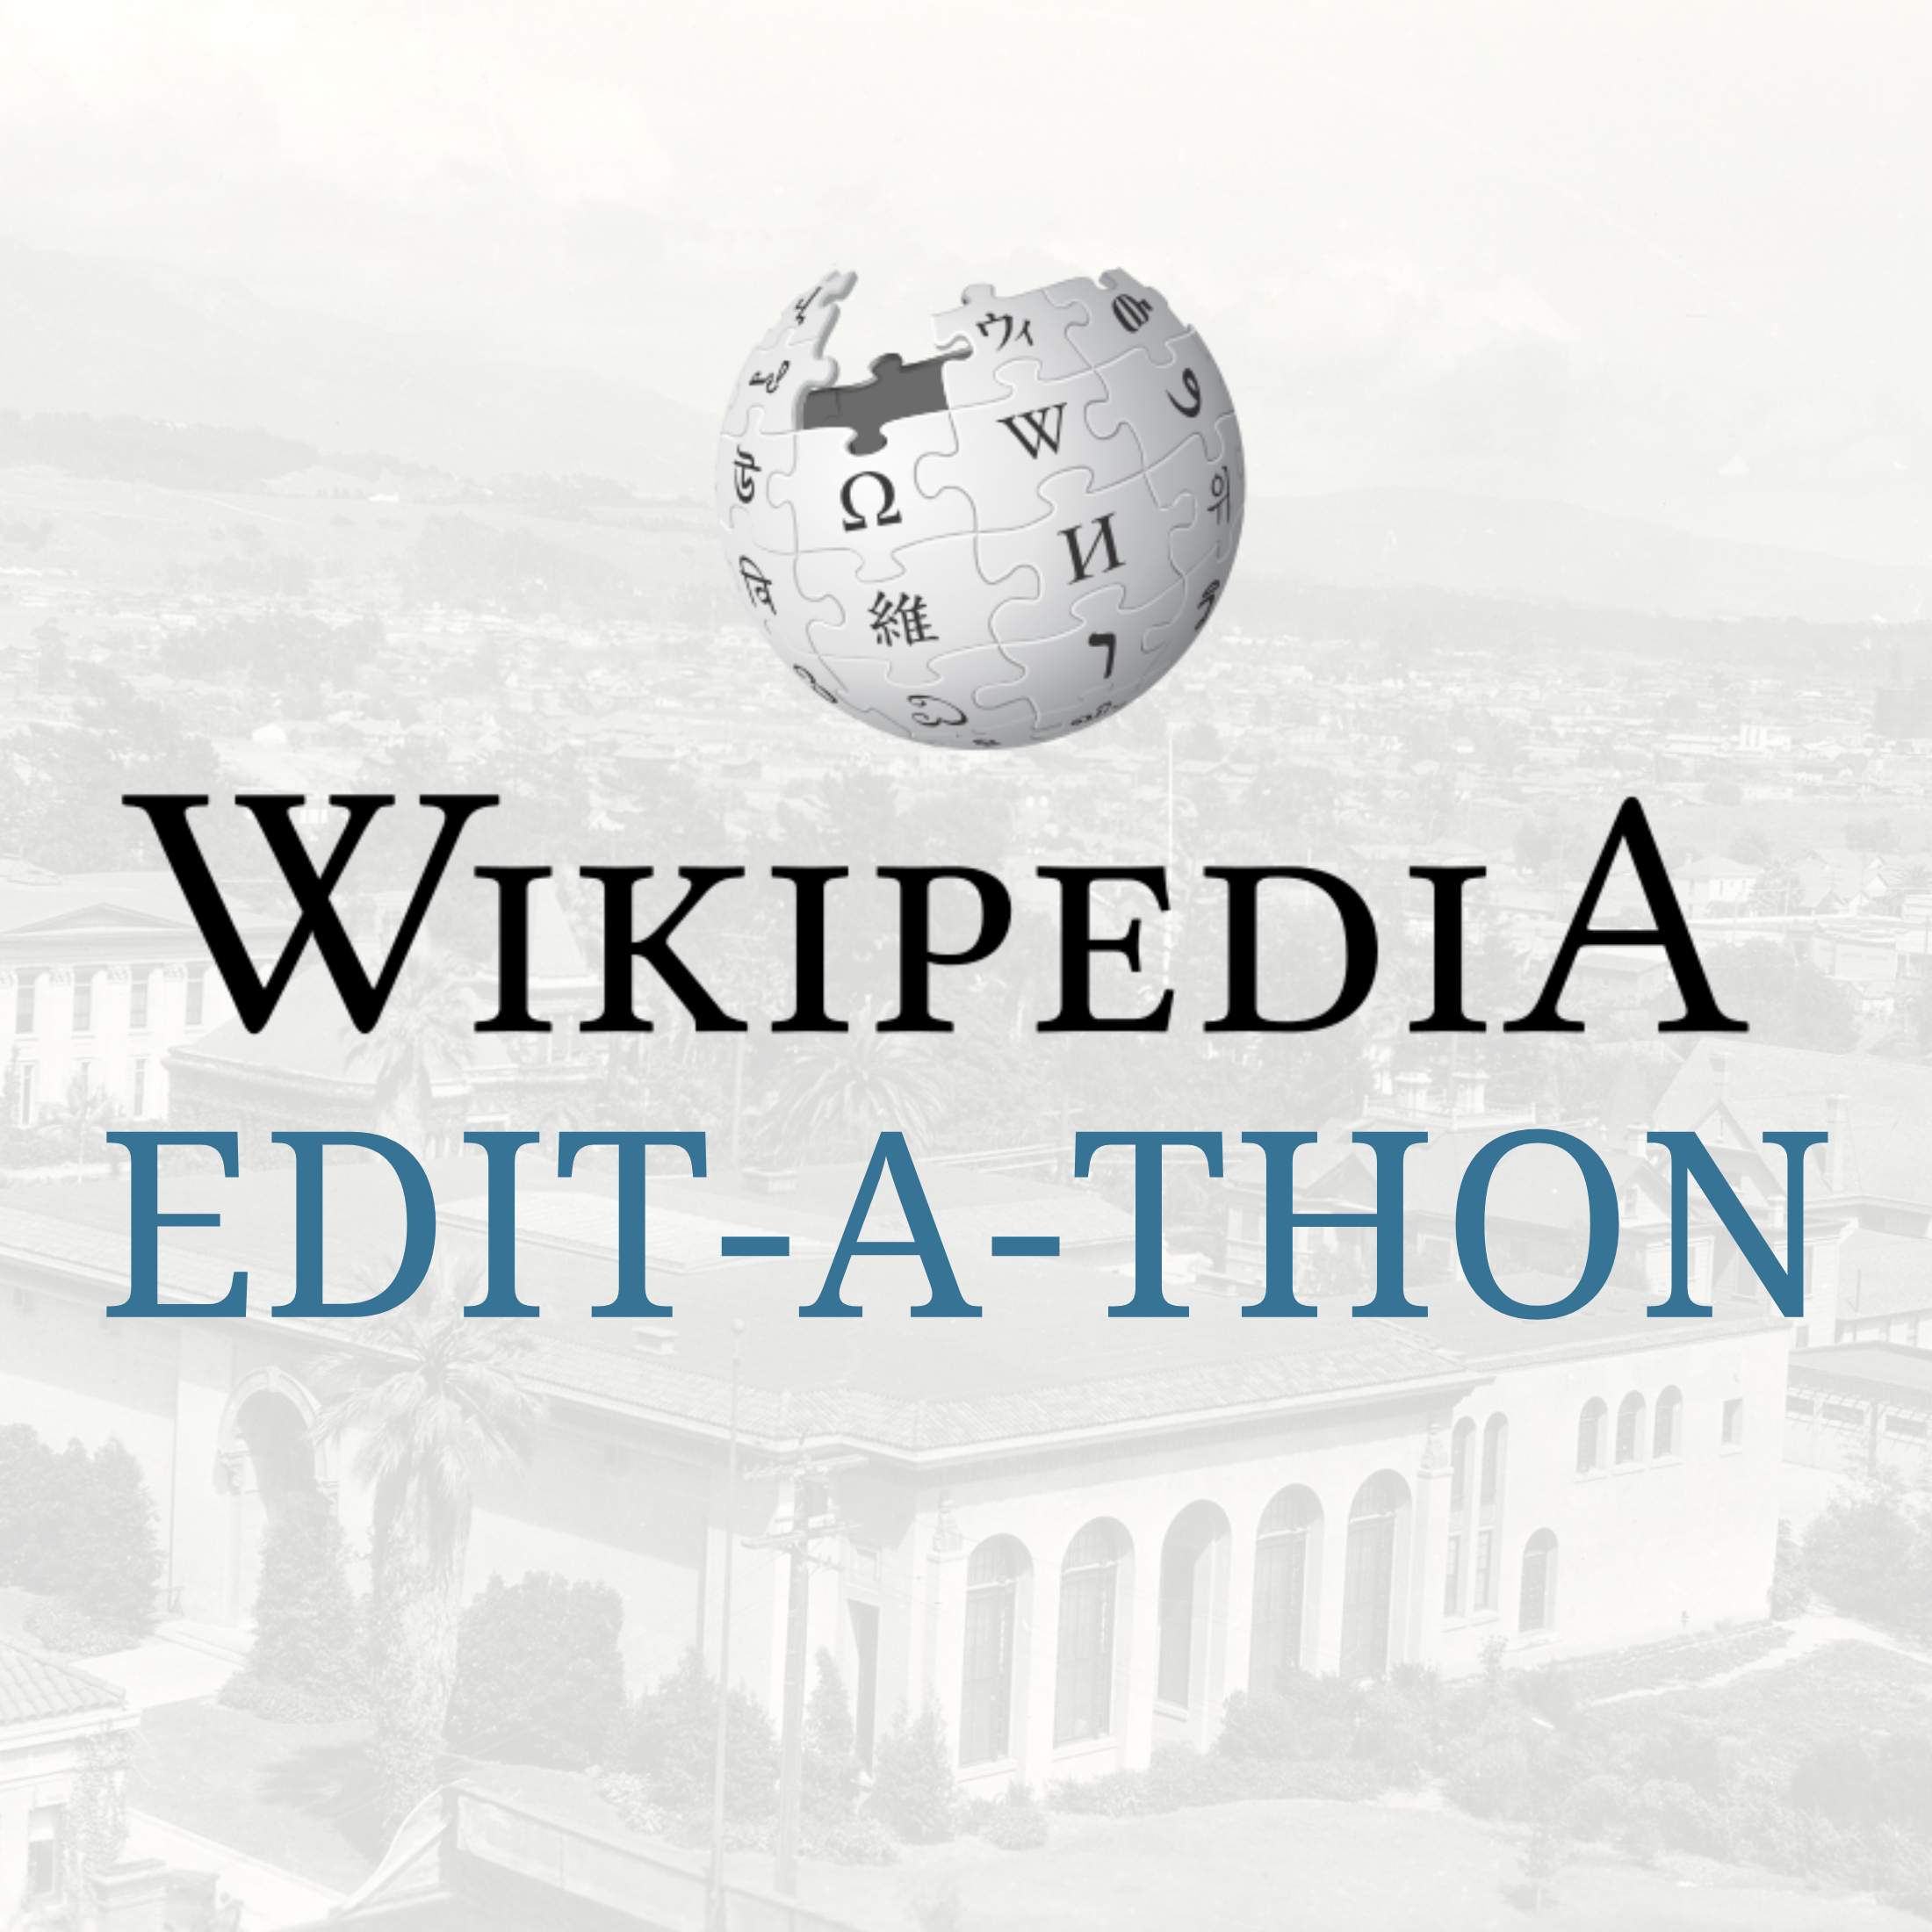 wikipedia edit-a-thon